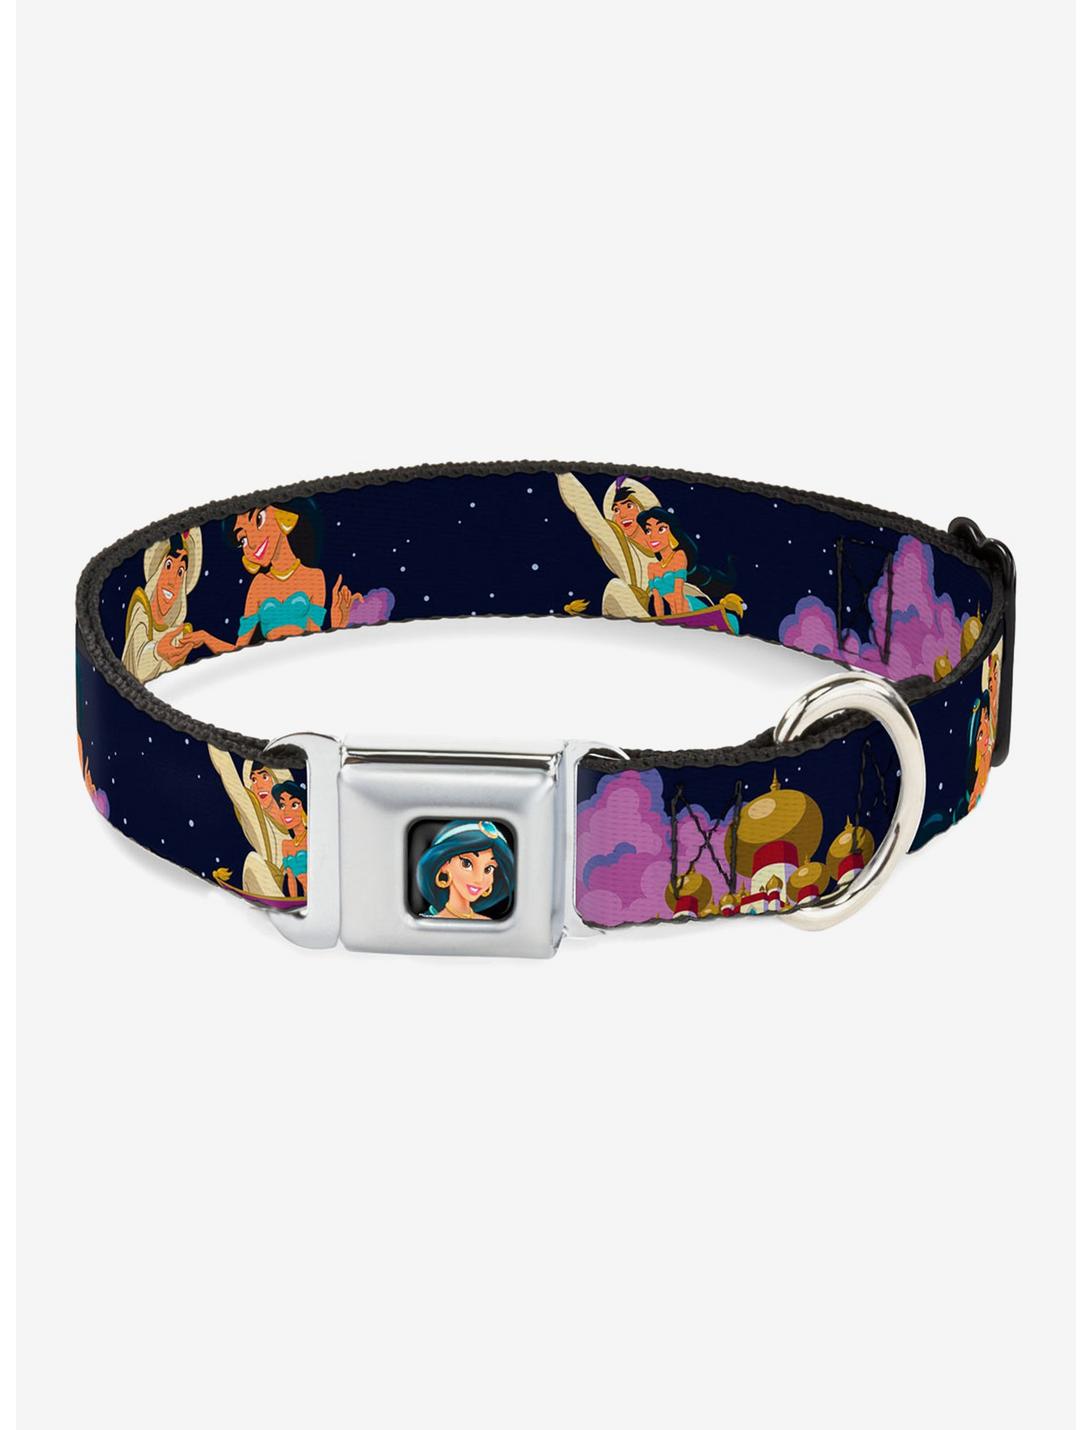 Disney Aladdin Jasmine Magic Carpet Ride Scenes Seatbelt Buckle Dog Collar, MULTICOLOR, hi-res